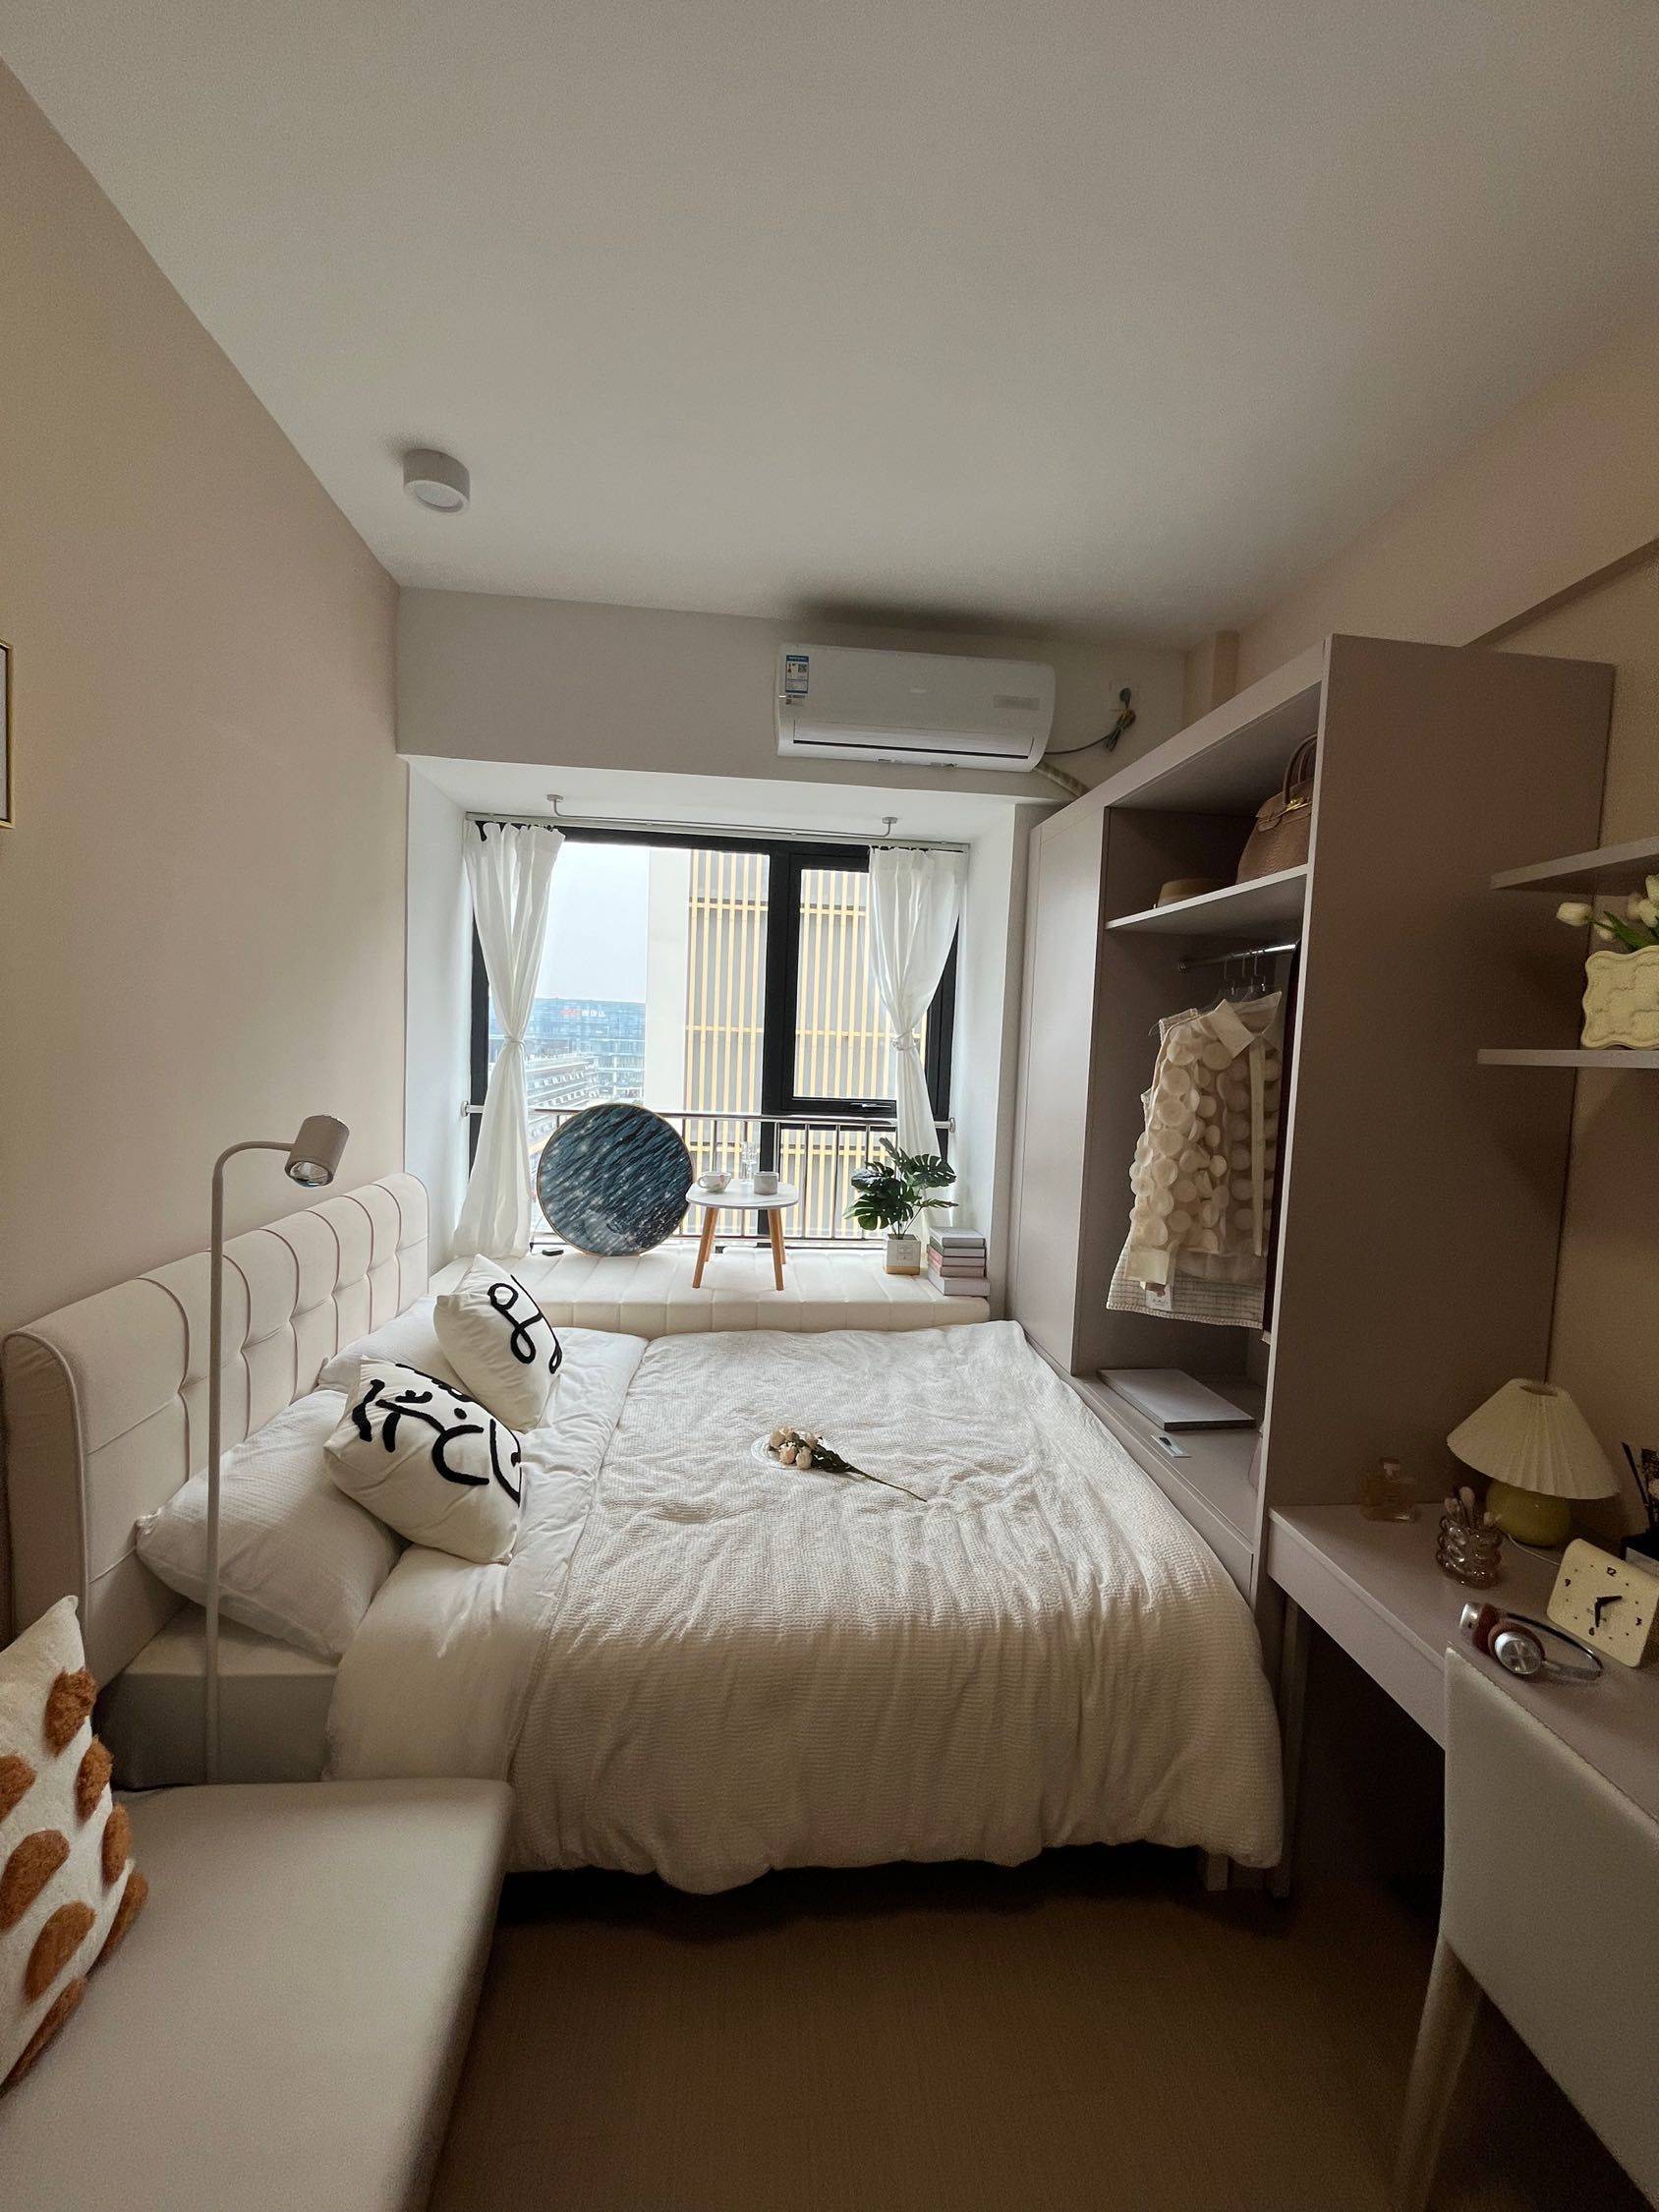 Shanghai-Pudong-Cozy Home,Clean&Comfy,No Gender Limit,Hustle & Bustle,“Friends”,Chilled,LGBTQ Friendly,Pet Friendly